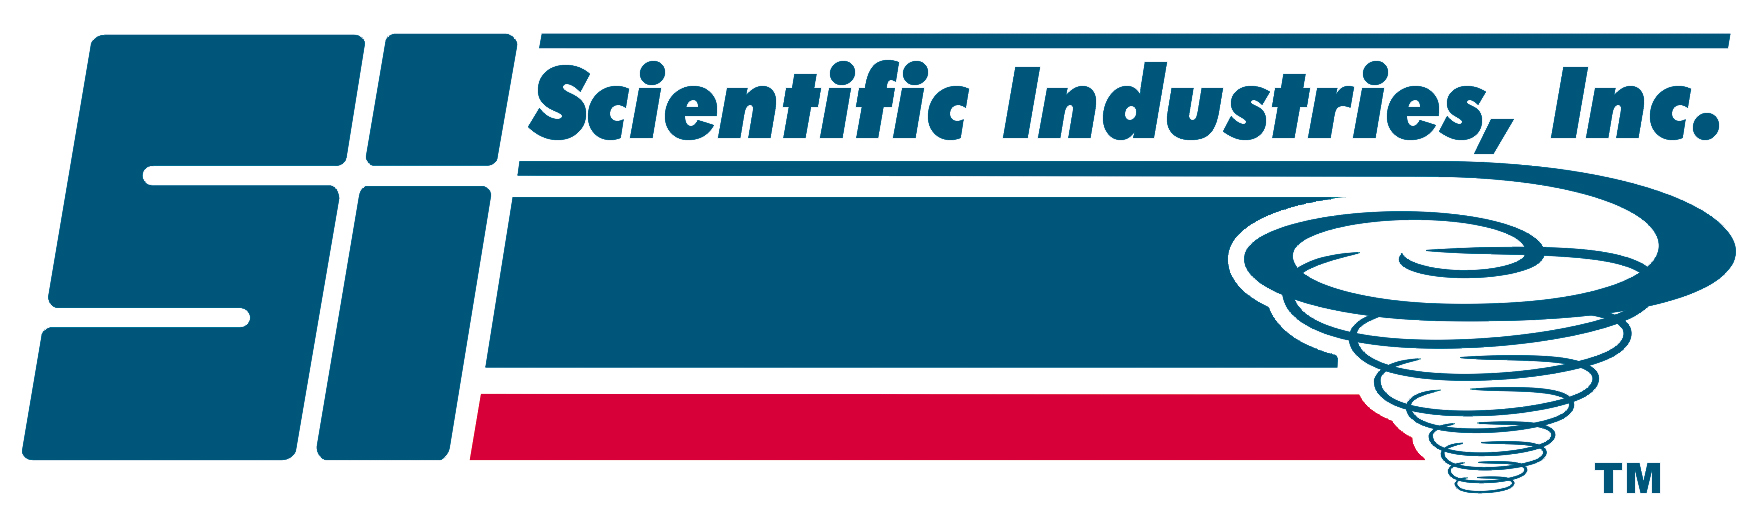 Science ltd. 70004-17 Компания “Optical Scientific, Inc.”, США Trimeter®-Optic. Universal Global Scientific Industrial co. Universal Global Scientific Industrial co., Ltd..